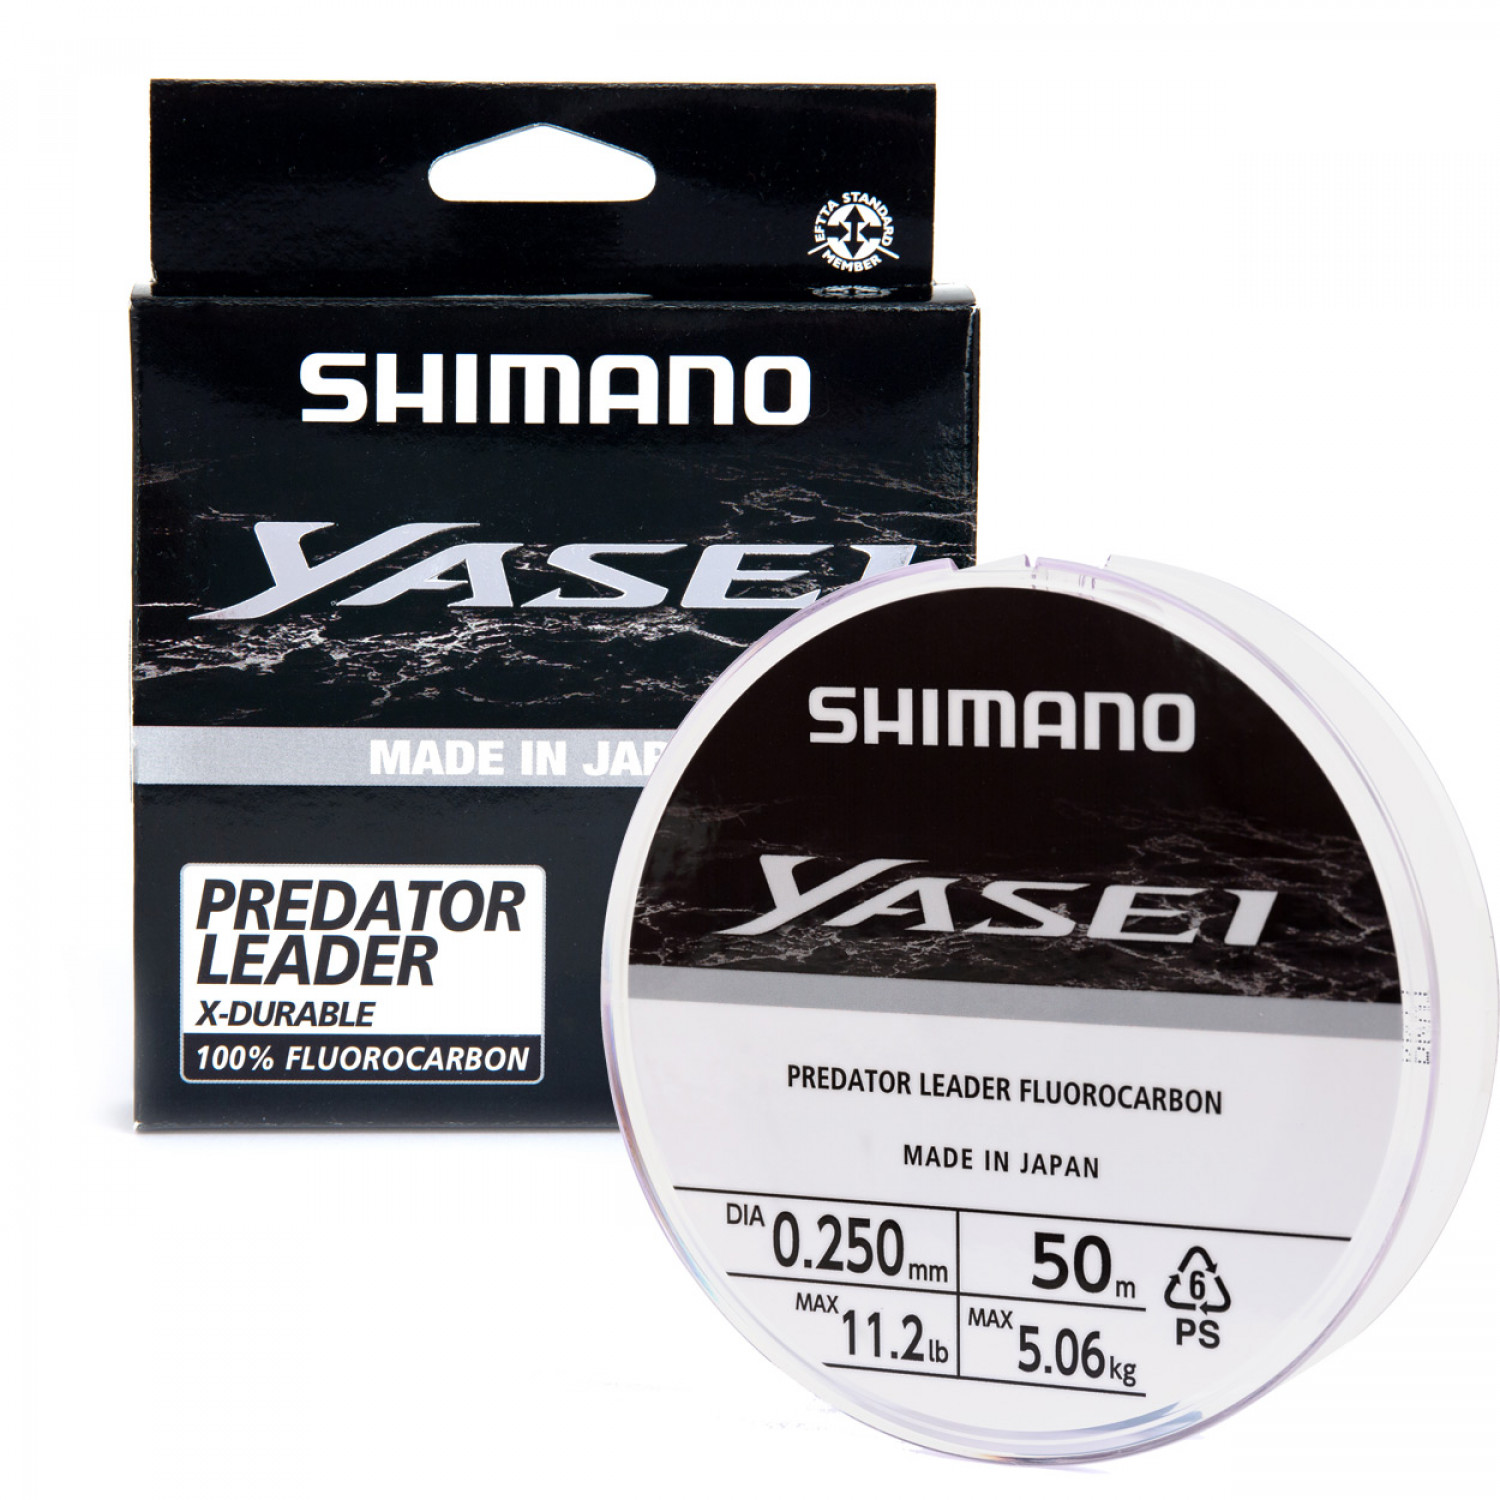 SHIMANO Yasei Predator Fluorocarbon Leader Fishing Line transparent  YASPFL10100 00